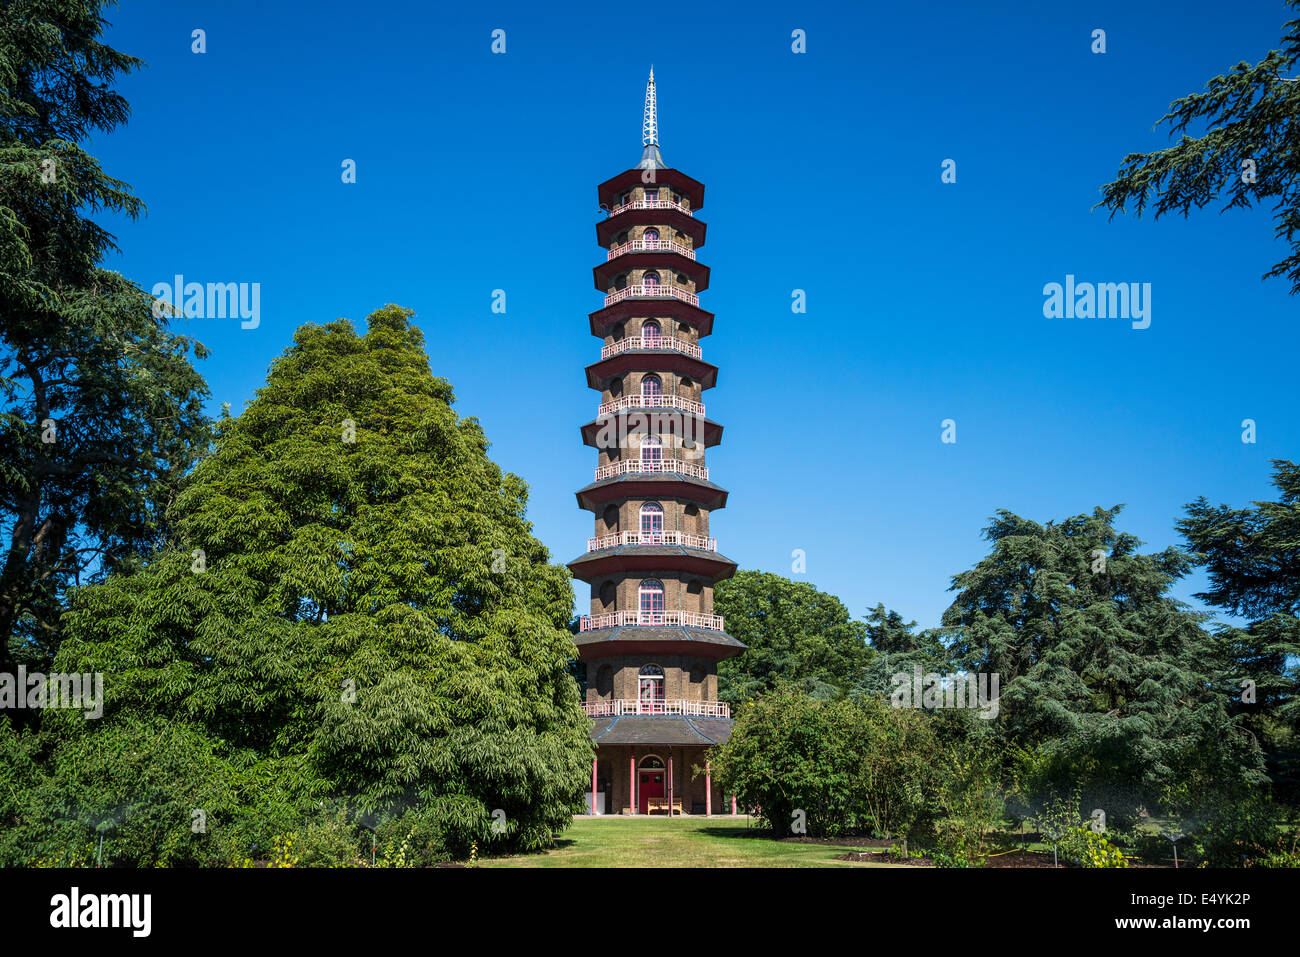 Pagoda, Kew Royal Botanic Gardens, London, UK Stock Photo